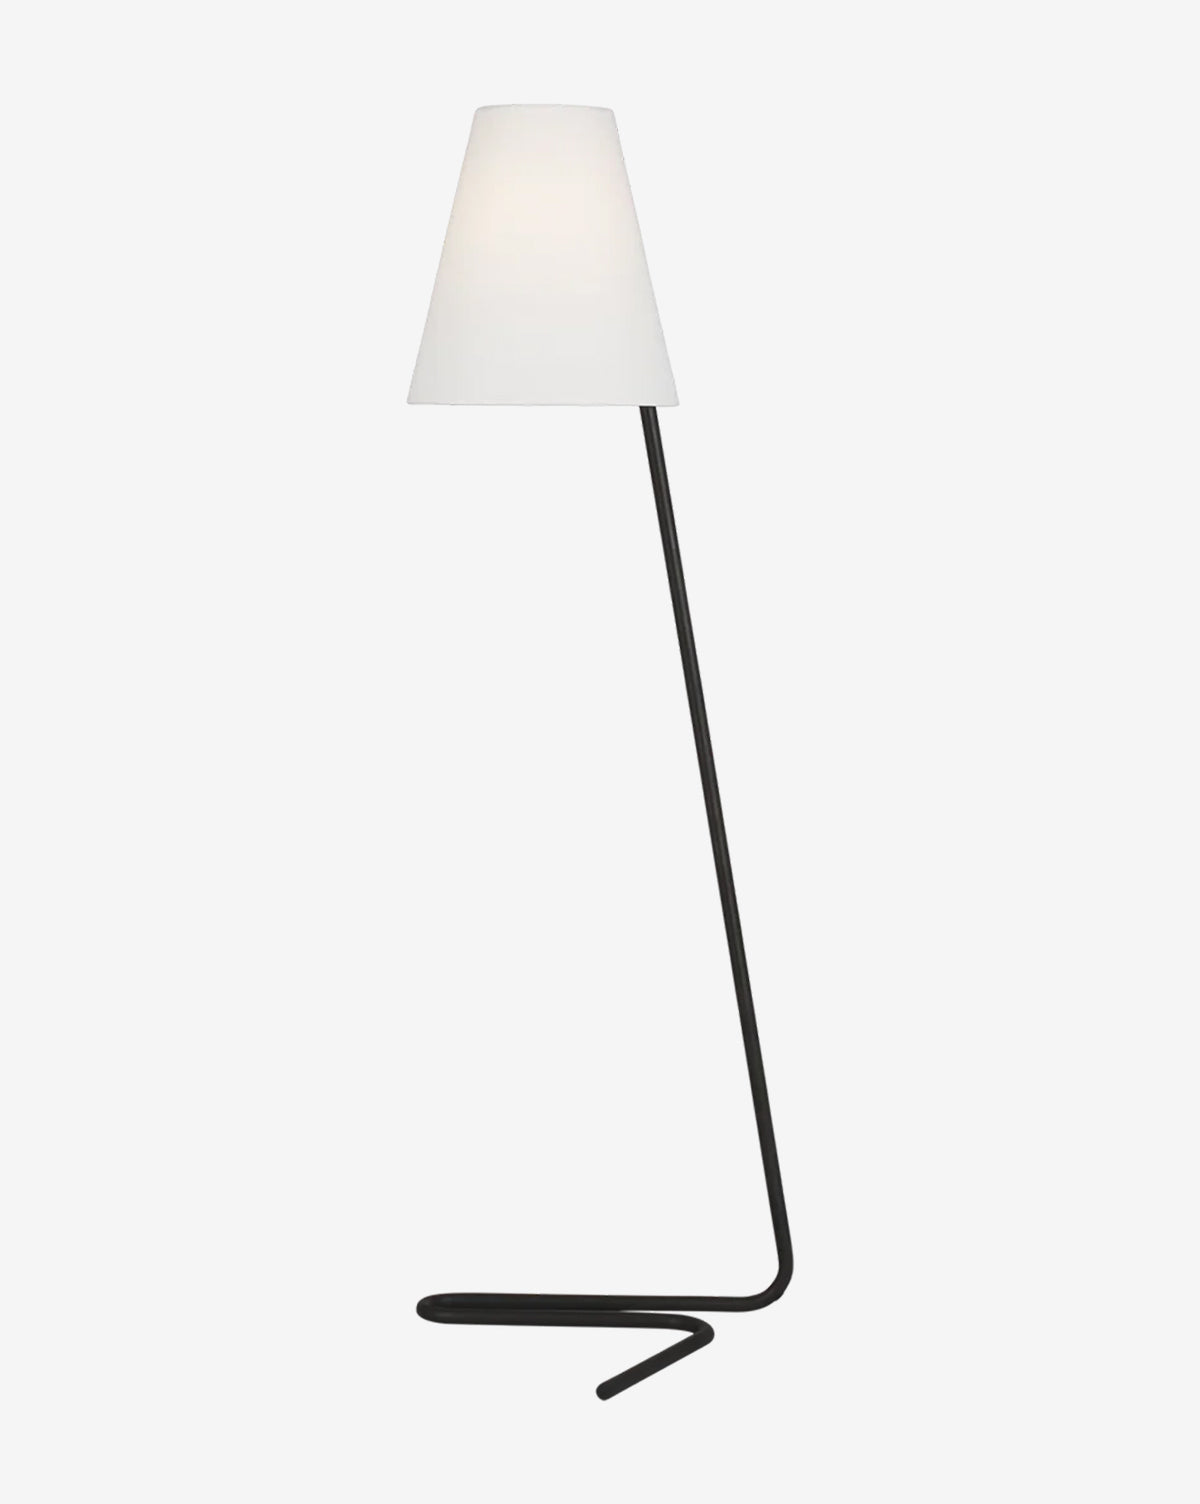 Generation Lighting, Jaxon Floor Lamp